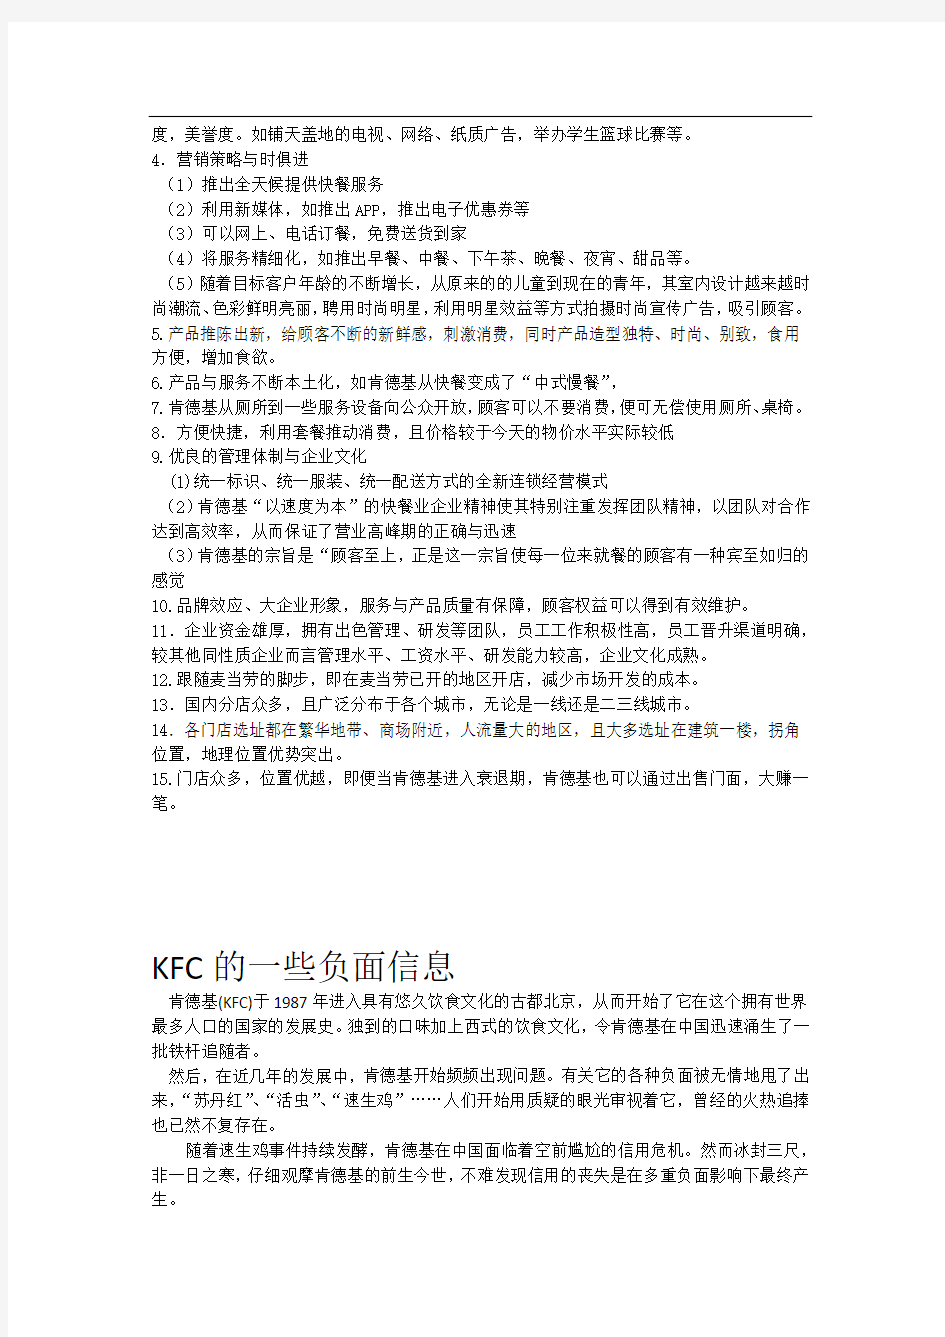 KFC肯德基的战略优缺点级其在中国开创以来所发生的问题